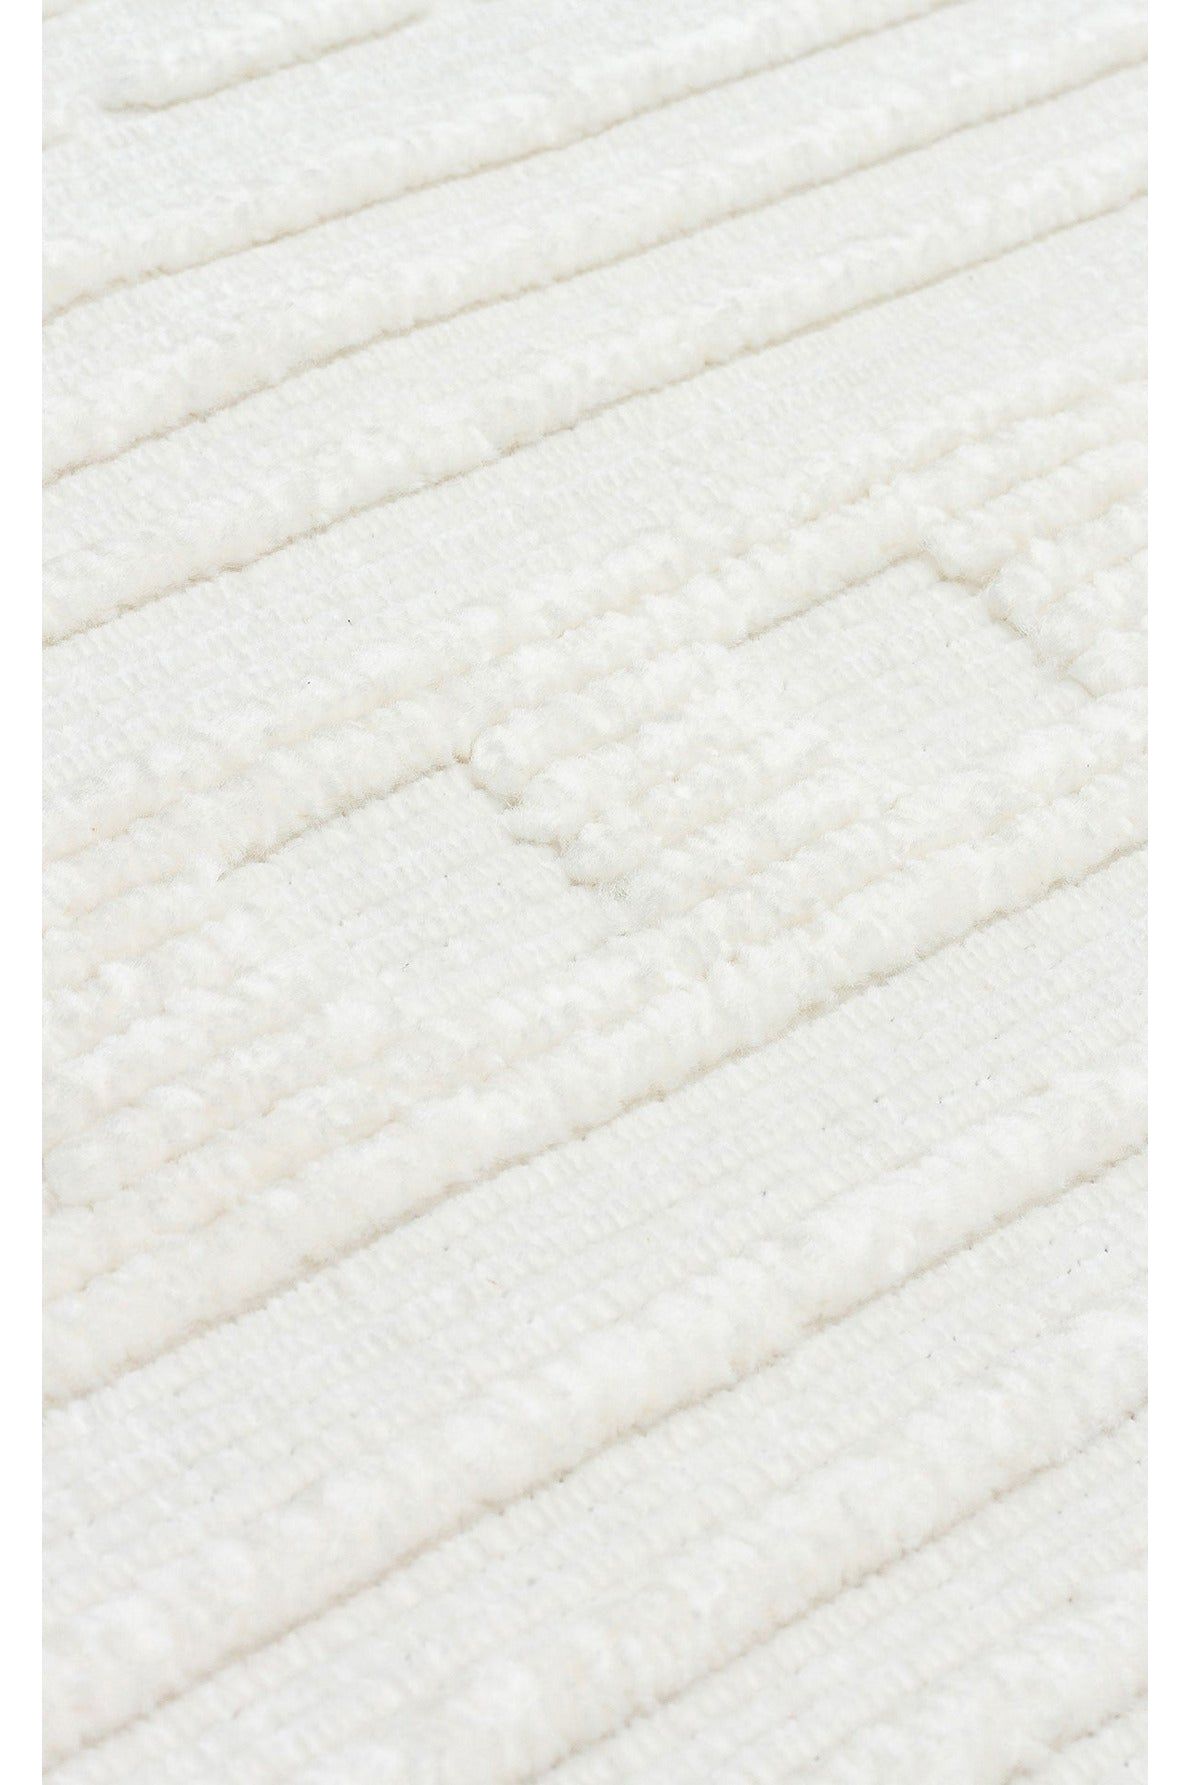 #Turkish_Carpets_Rugs# #Modern_Carpets# #Abrash_Carpets#Jkr 02 Cream